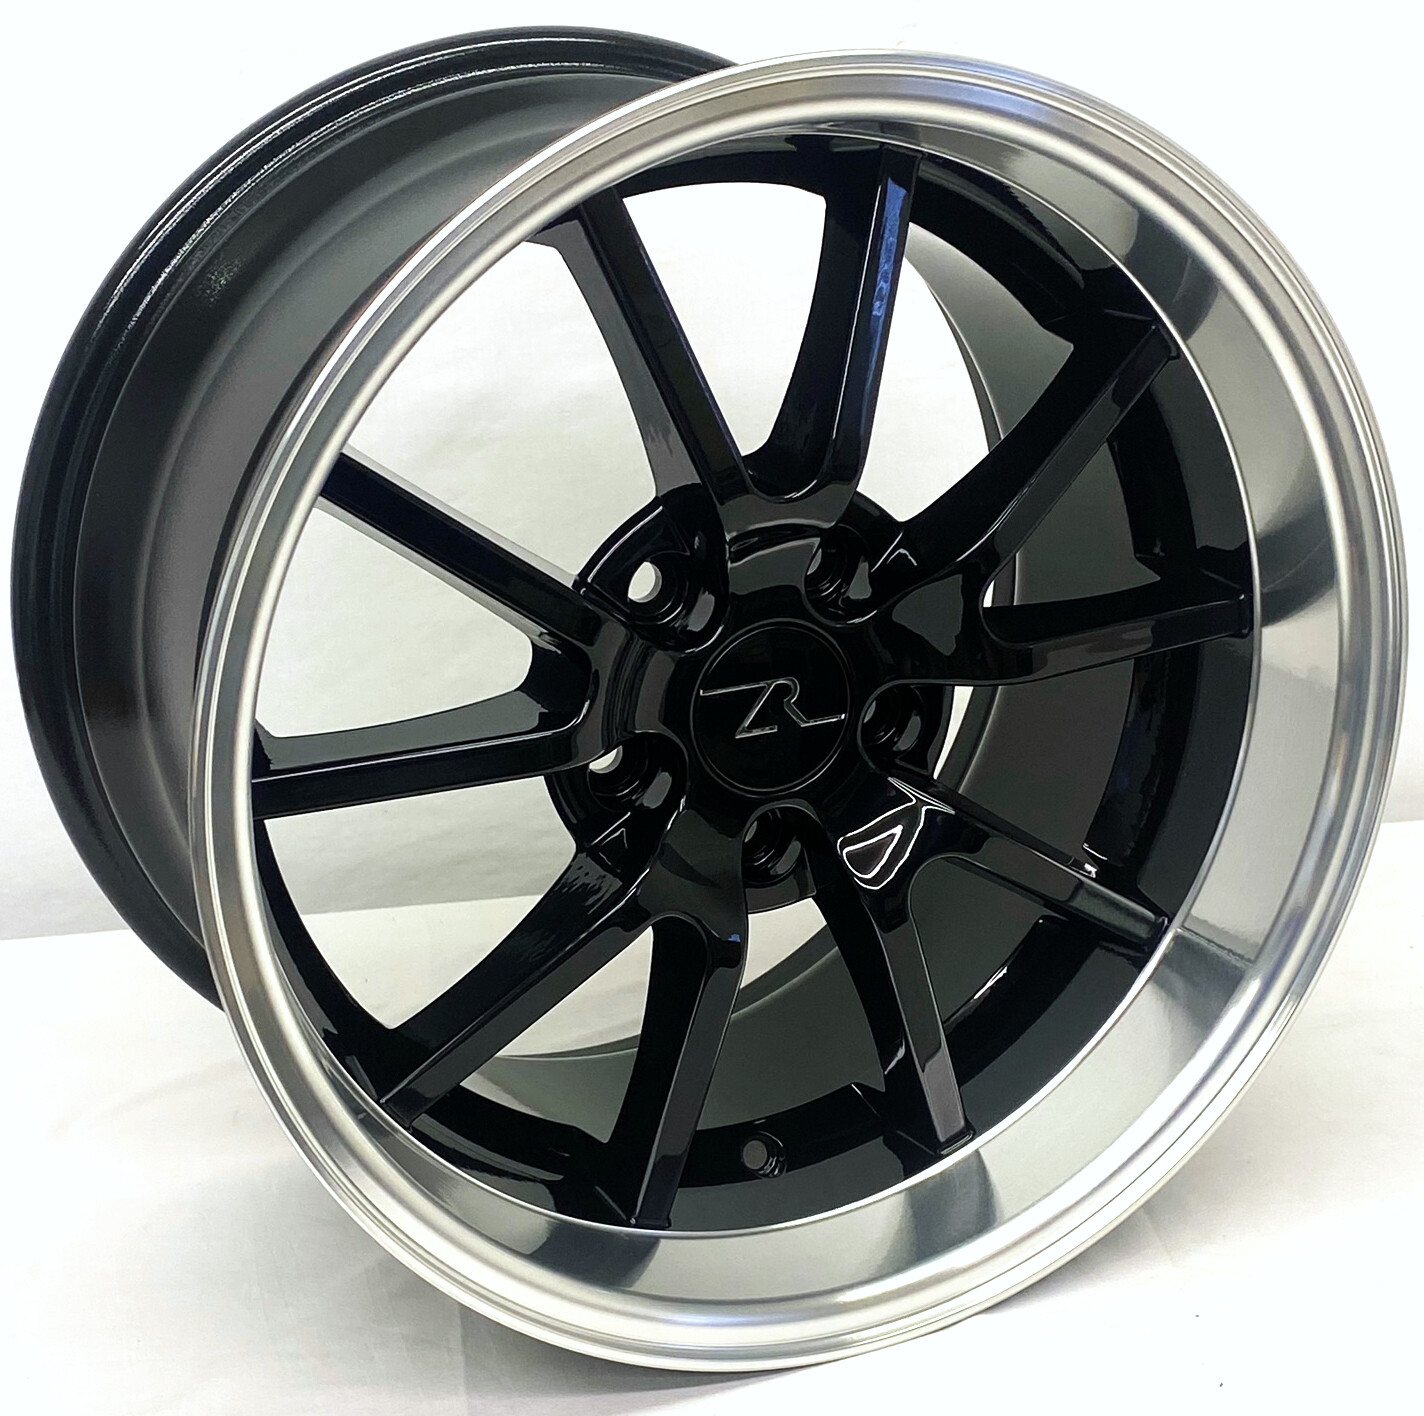 (2) 17X9 & (2) 17x10.5 Gloss Black with Mirror Lip FR500 Style Wheels